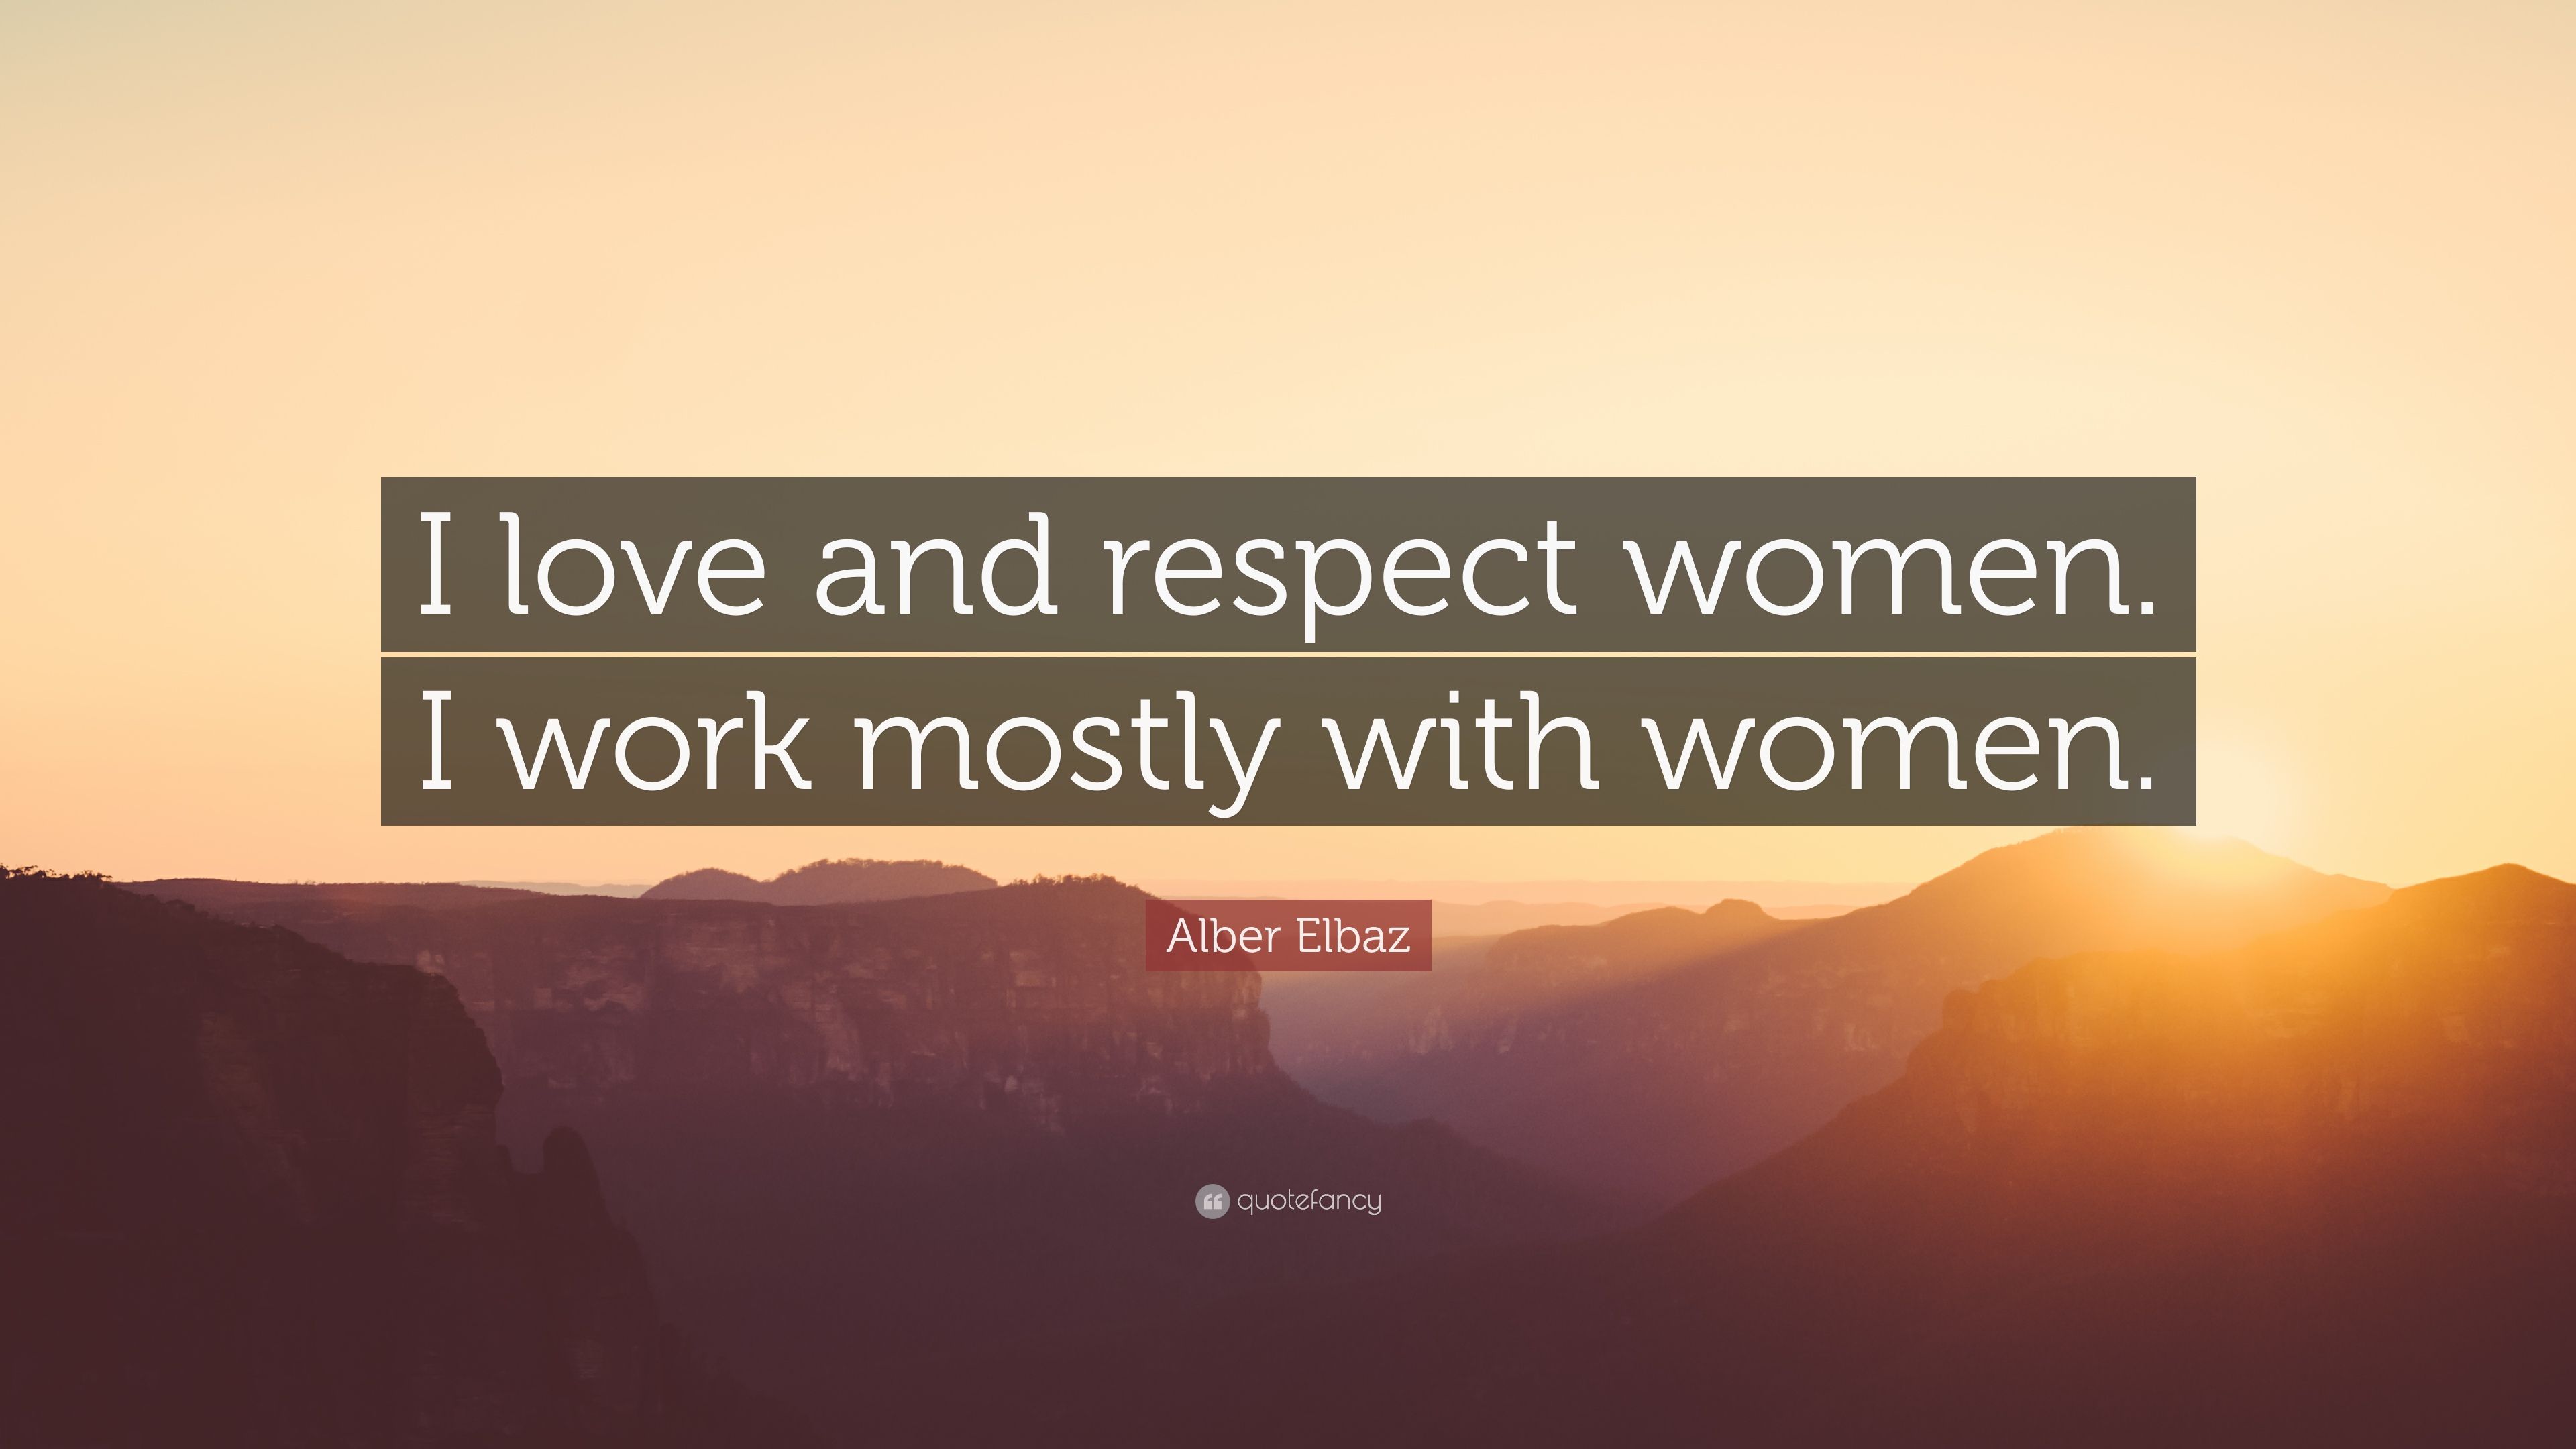 Alber Elbaz Quote: "I love and respect women. 